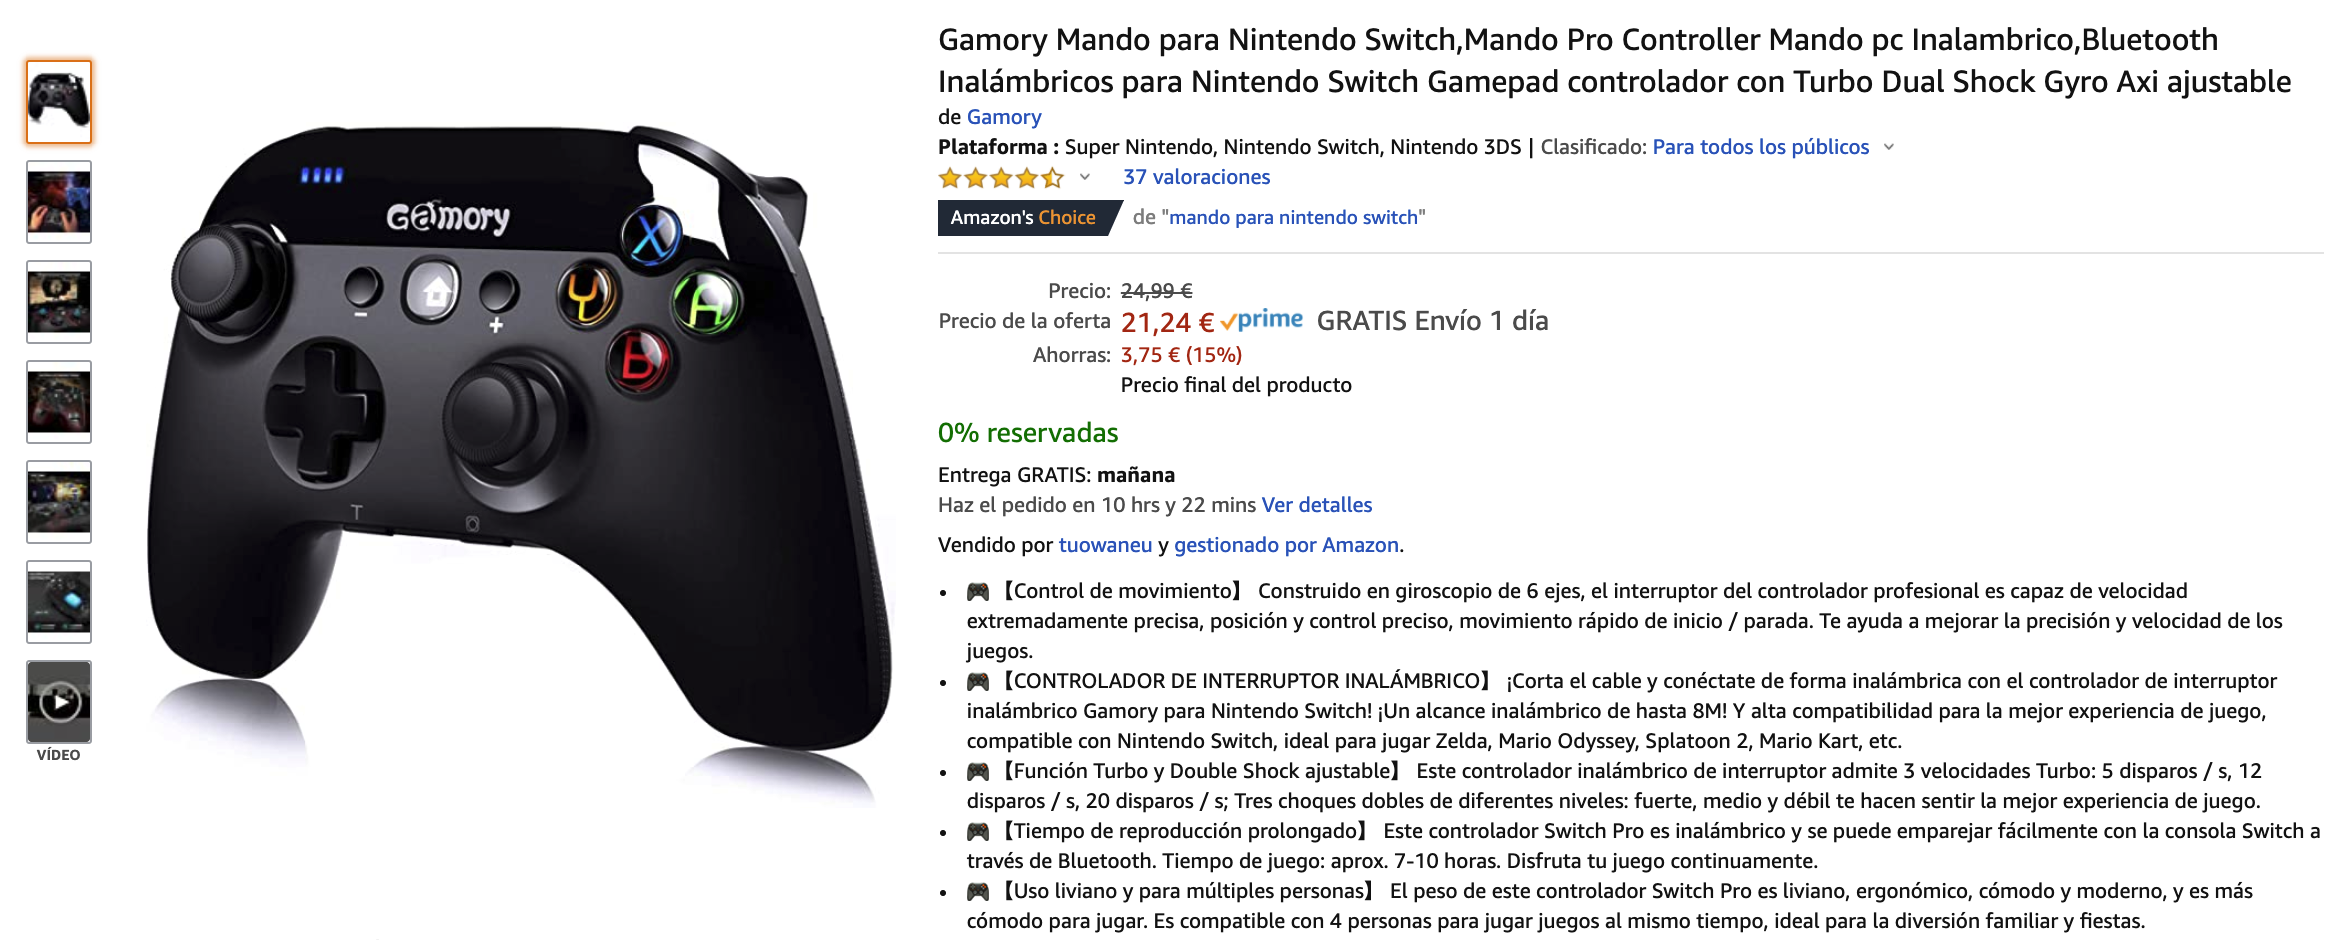 Gamory Mando pro Nintendo Switch,Mando Pro Controller Mando pc Inalambrico,Bluet  